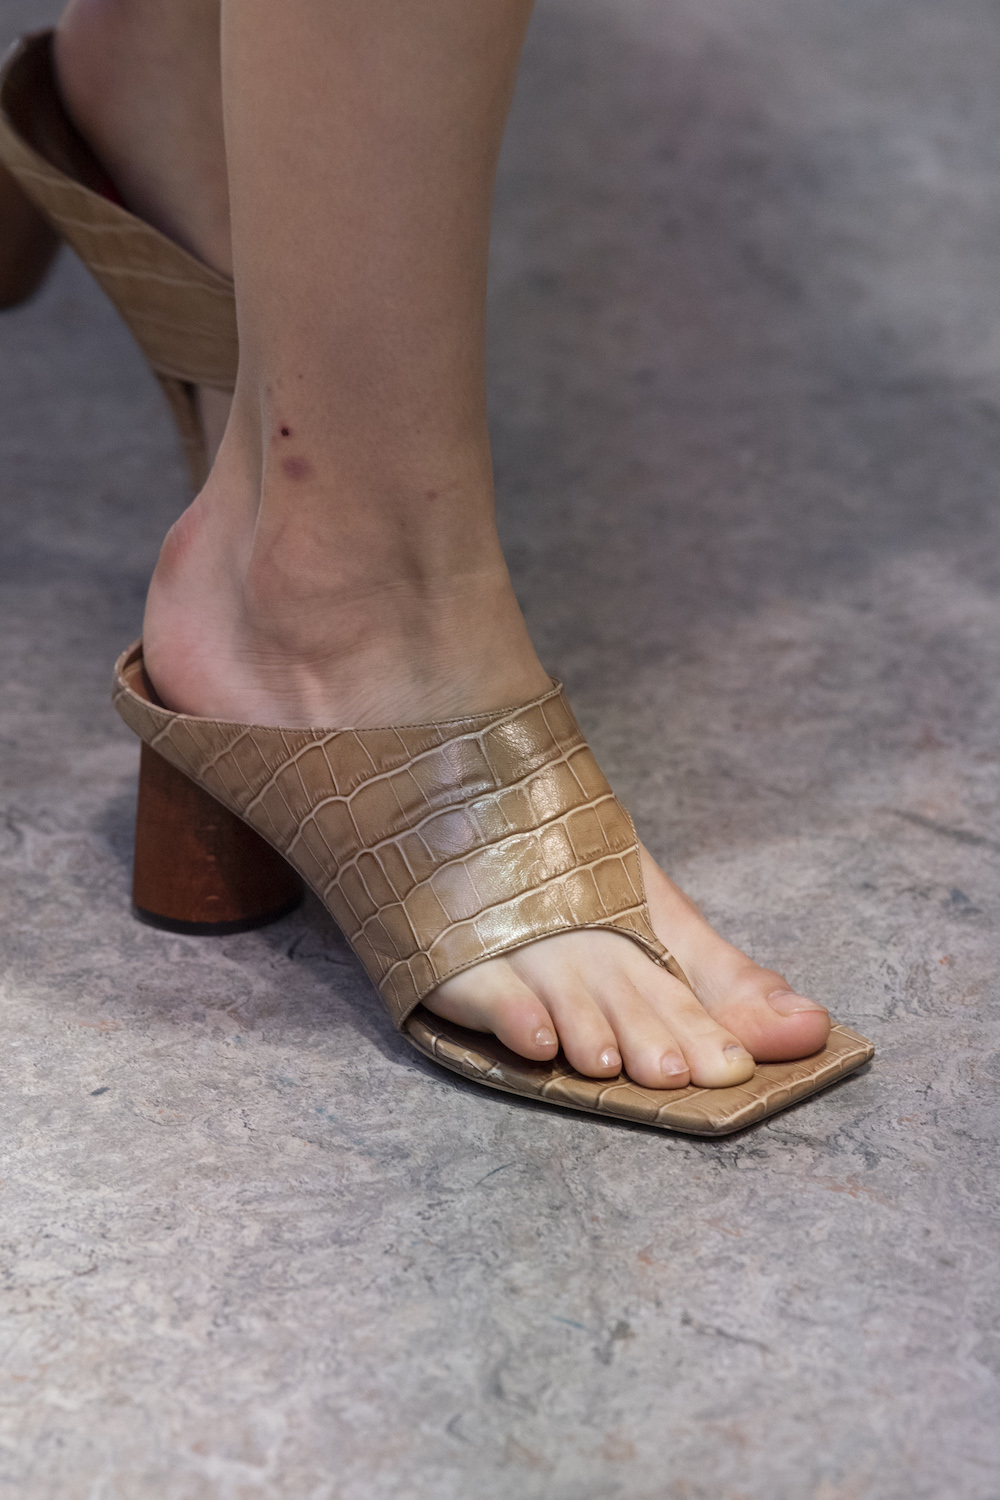 Обувь сезона весна-лето 2020: вьетнамки, вязаные сапоги и «мамины мюли» (фото 12)